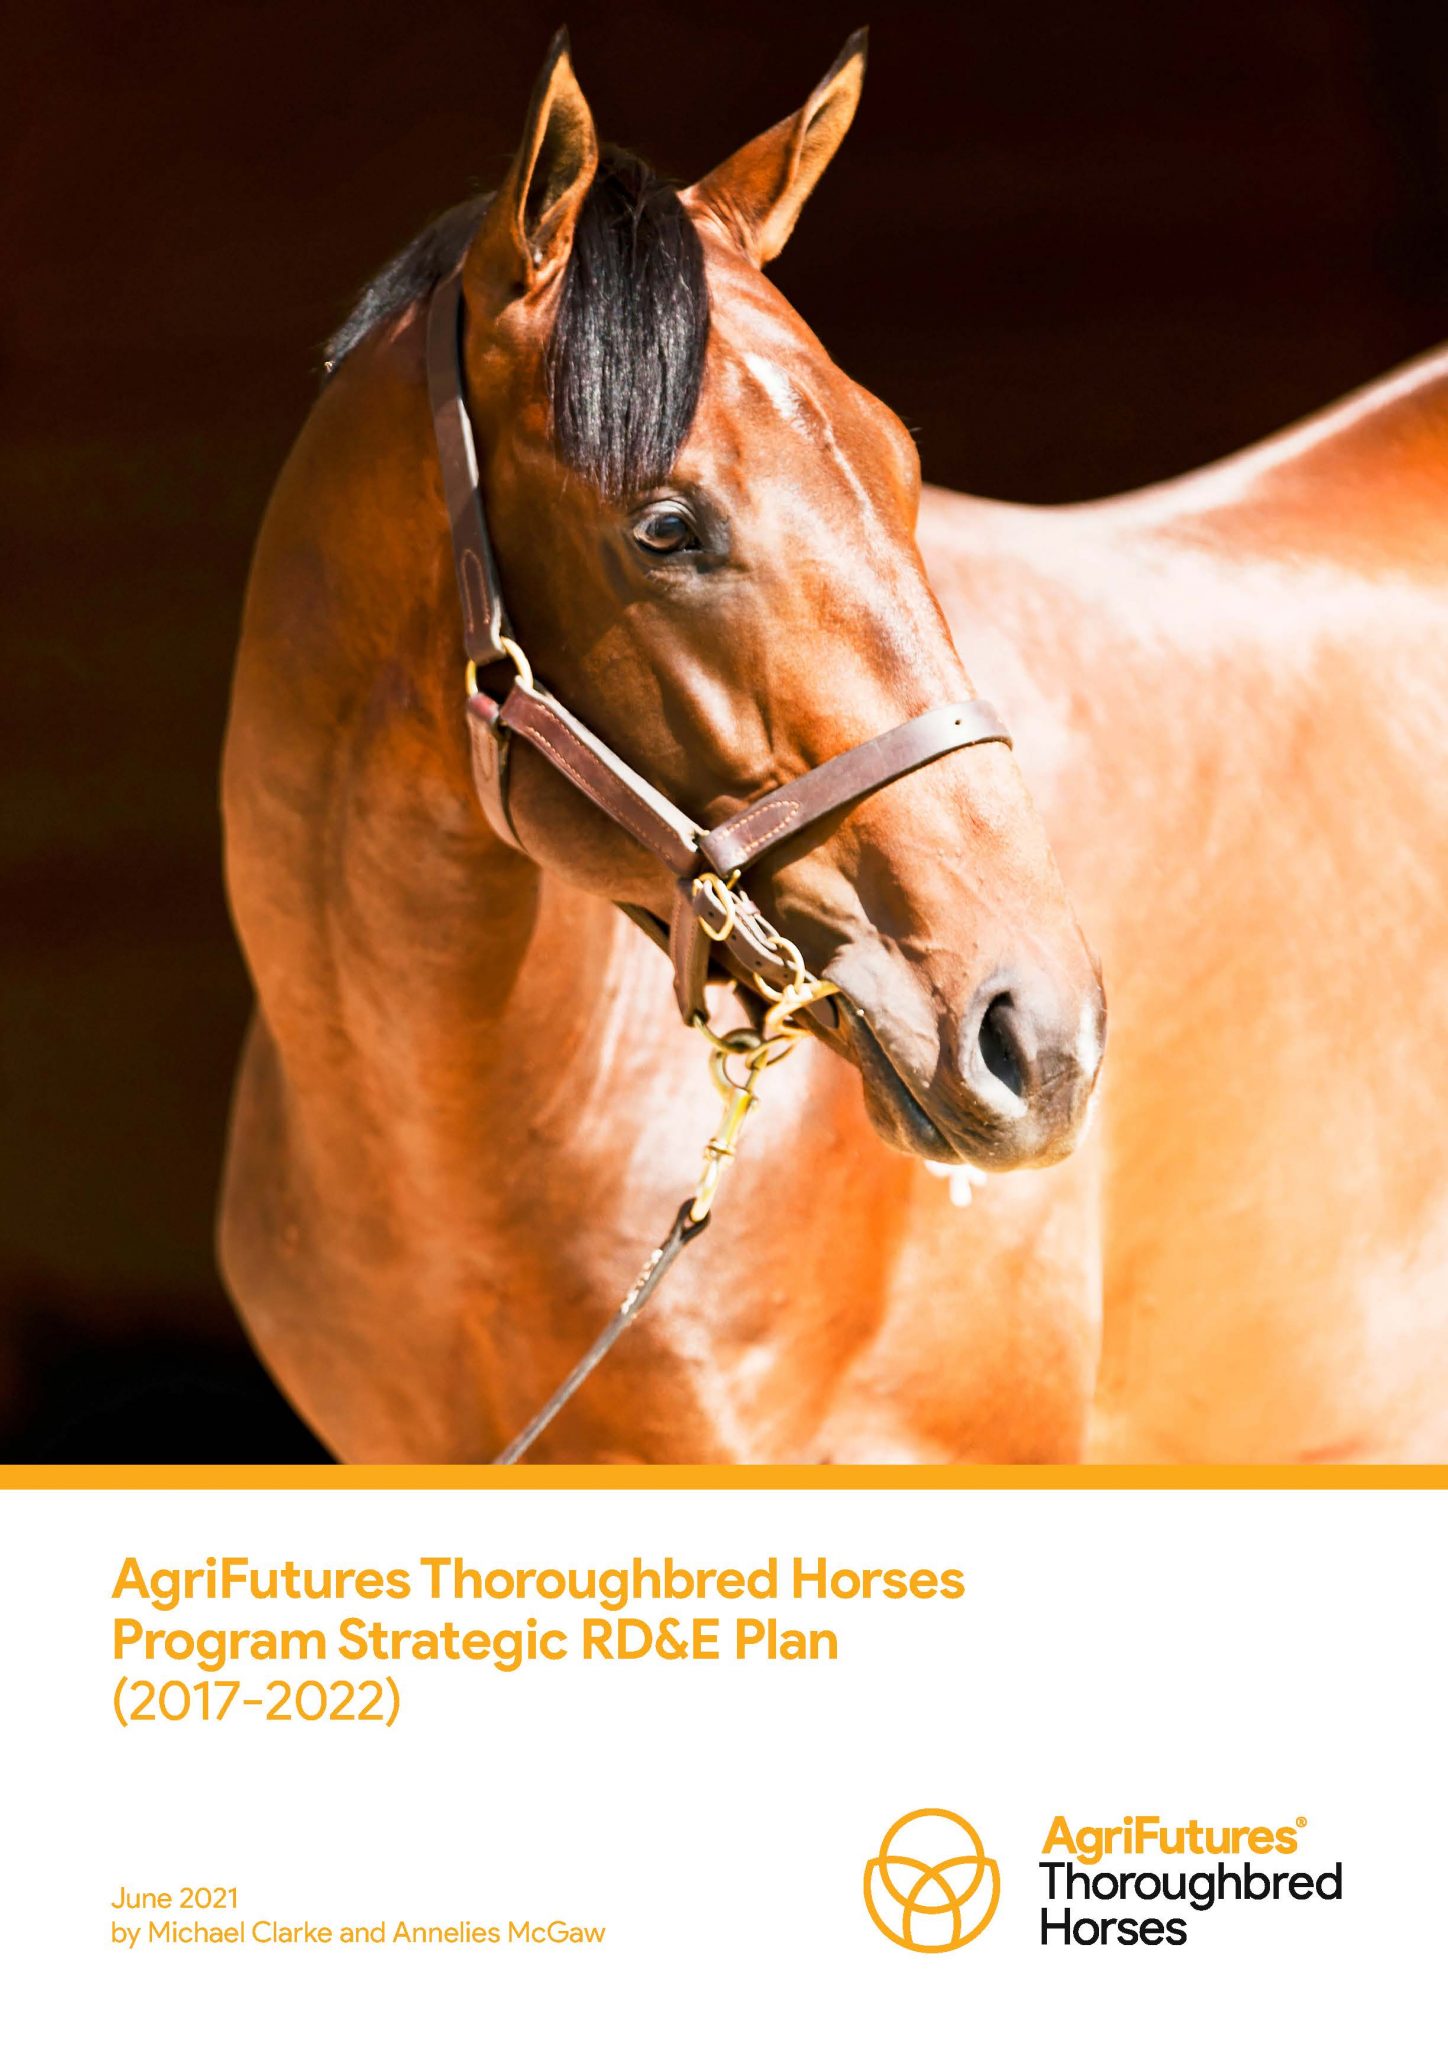 AgriFutures Thoroughbred Horses Program Strategic RD&E Plan (2017-2022) - image